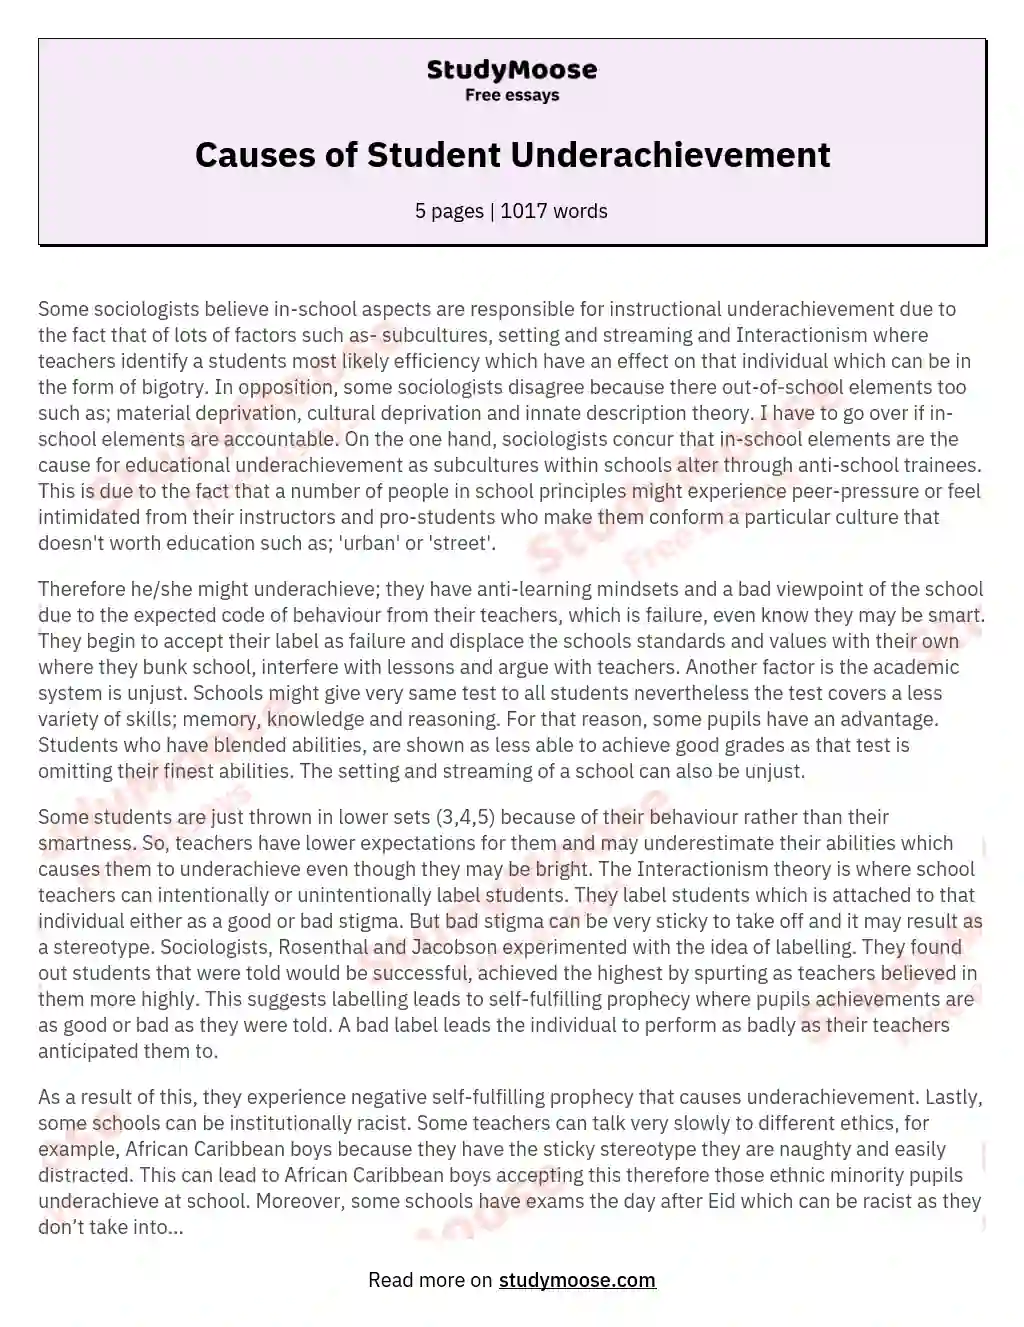 Causes of Student Underachievement essay